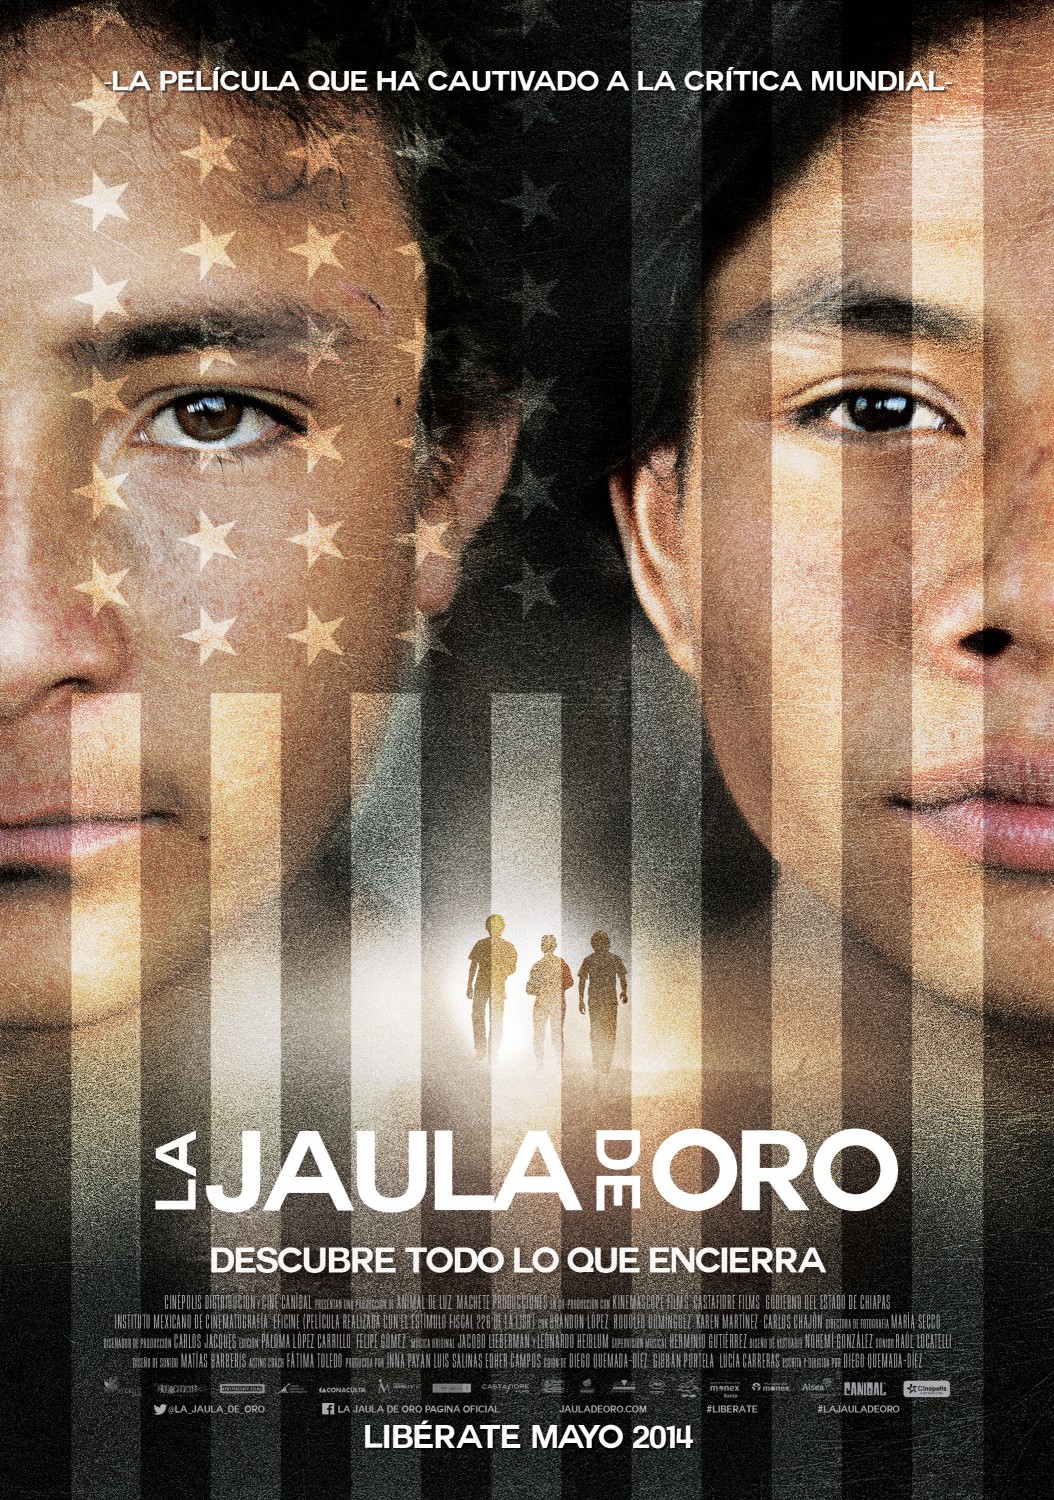 Extra Large Movie Poster Image for La jaula de oro (#5 of 8)